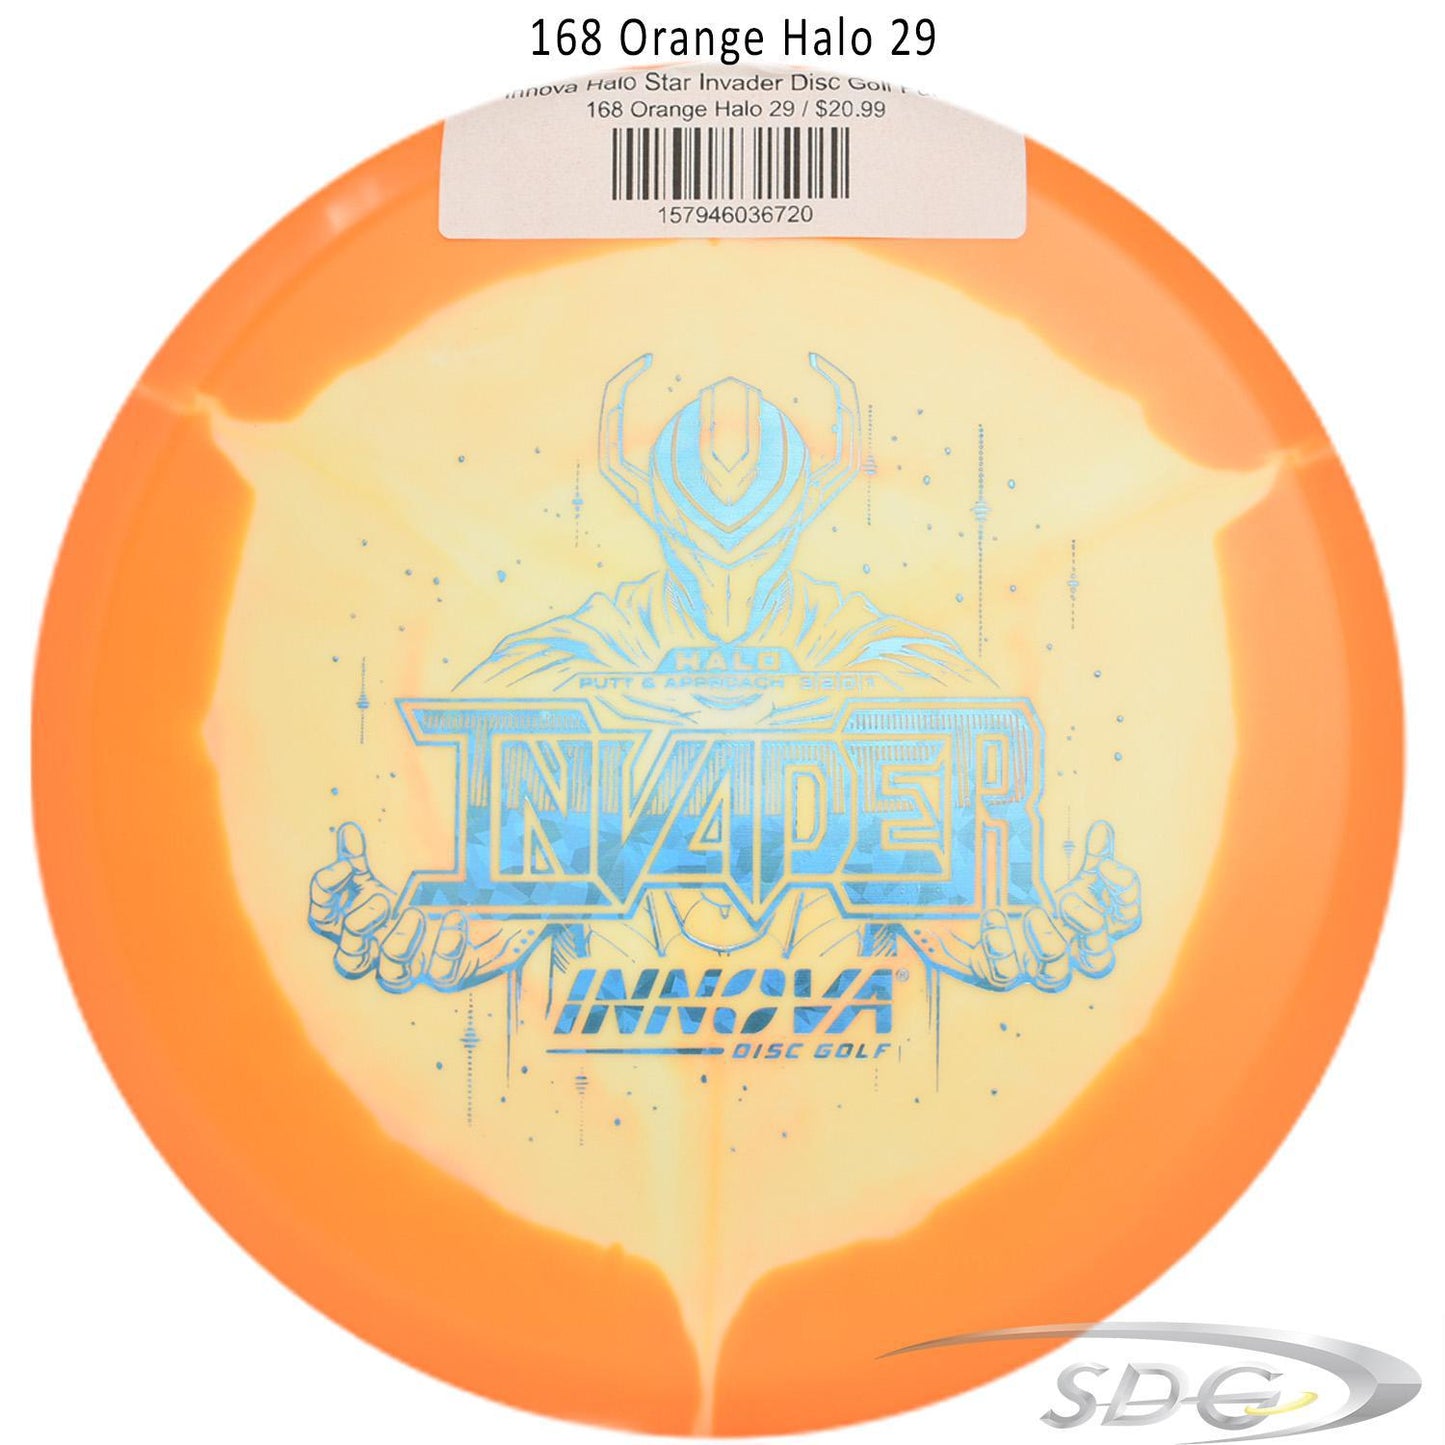 innova-halo-star-invader-disc-golf-putter 168 Orange Halo 29 